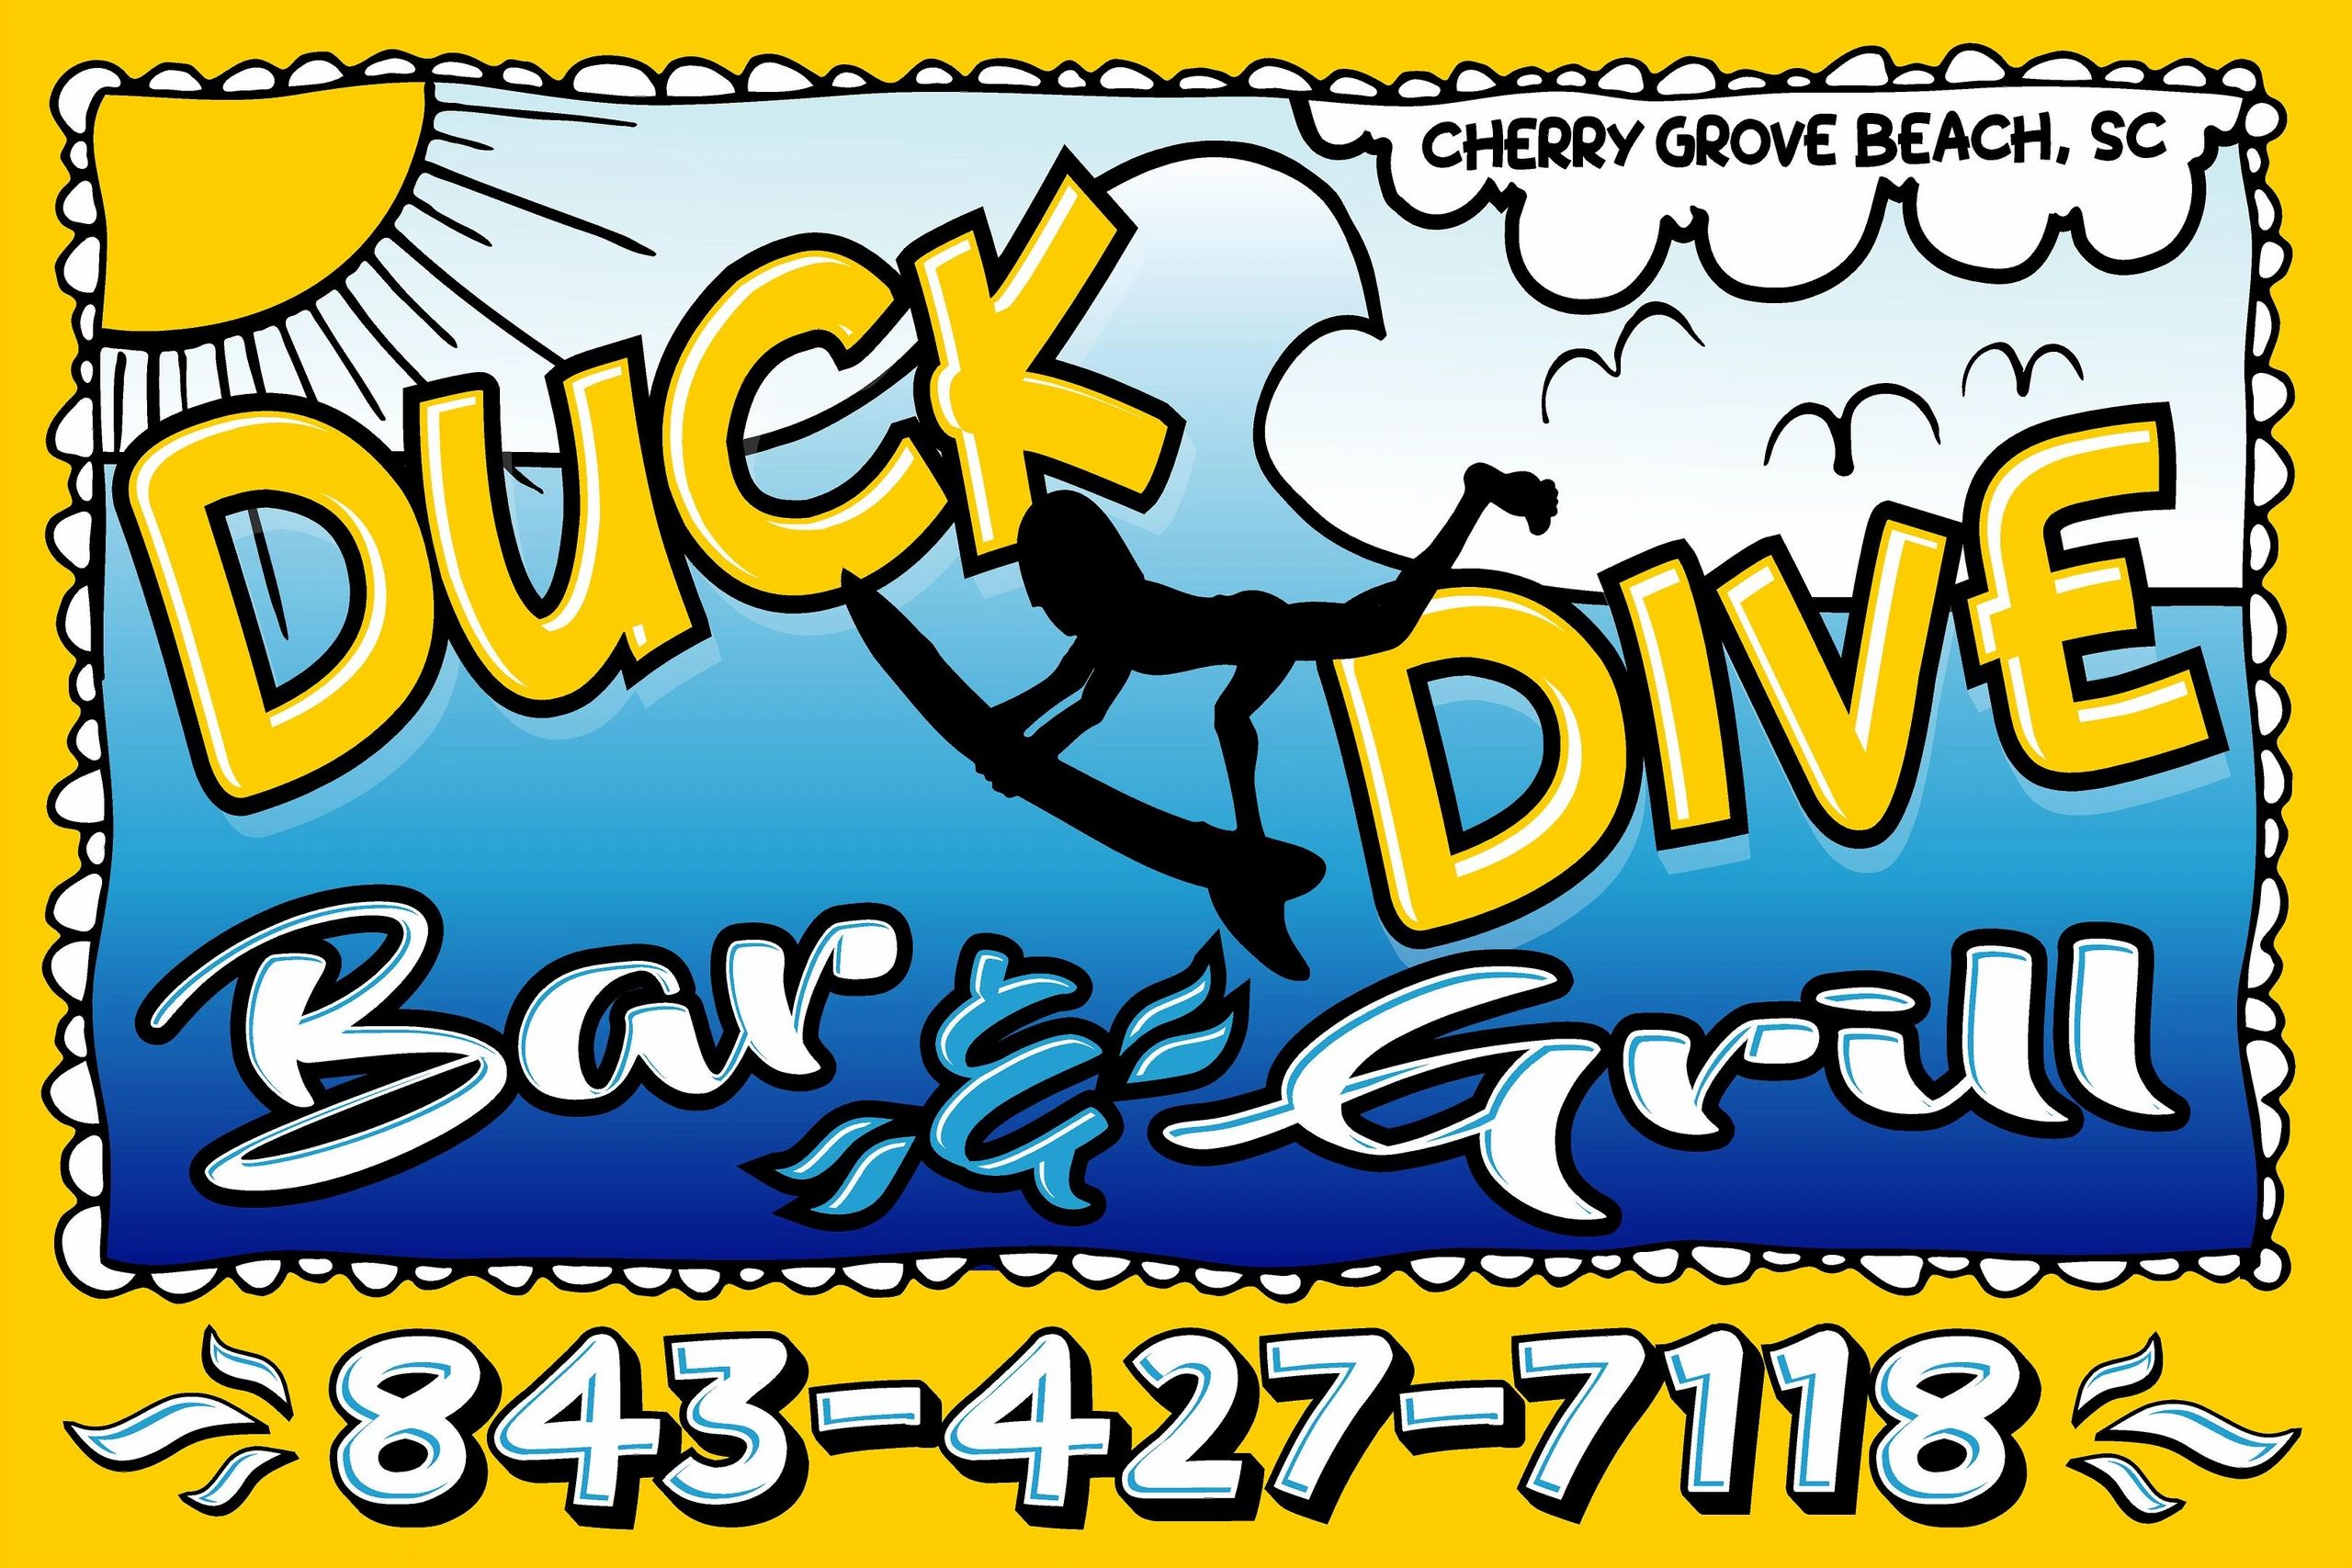 The Grove Beach Bar and Grill